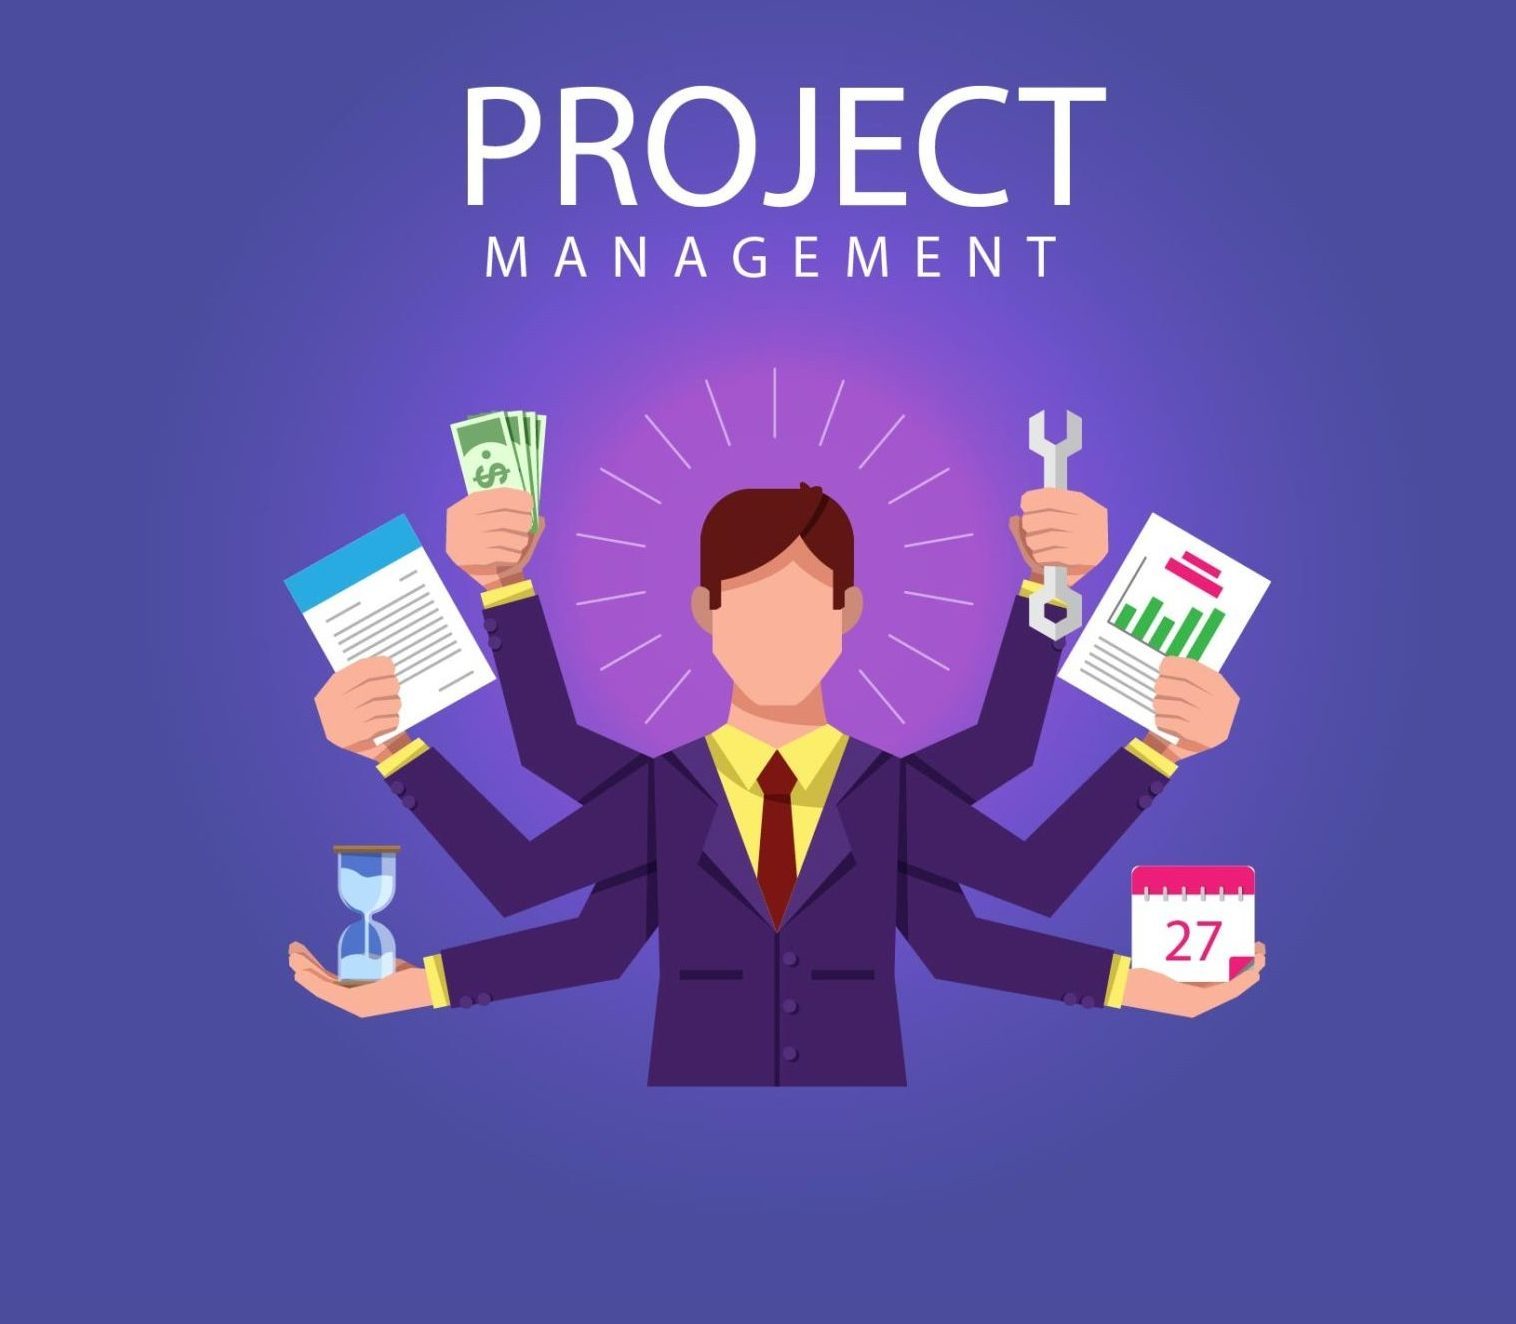 Project management erp system